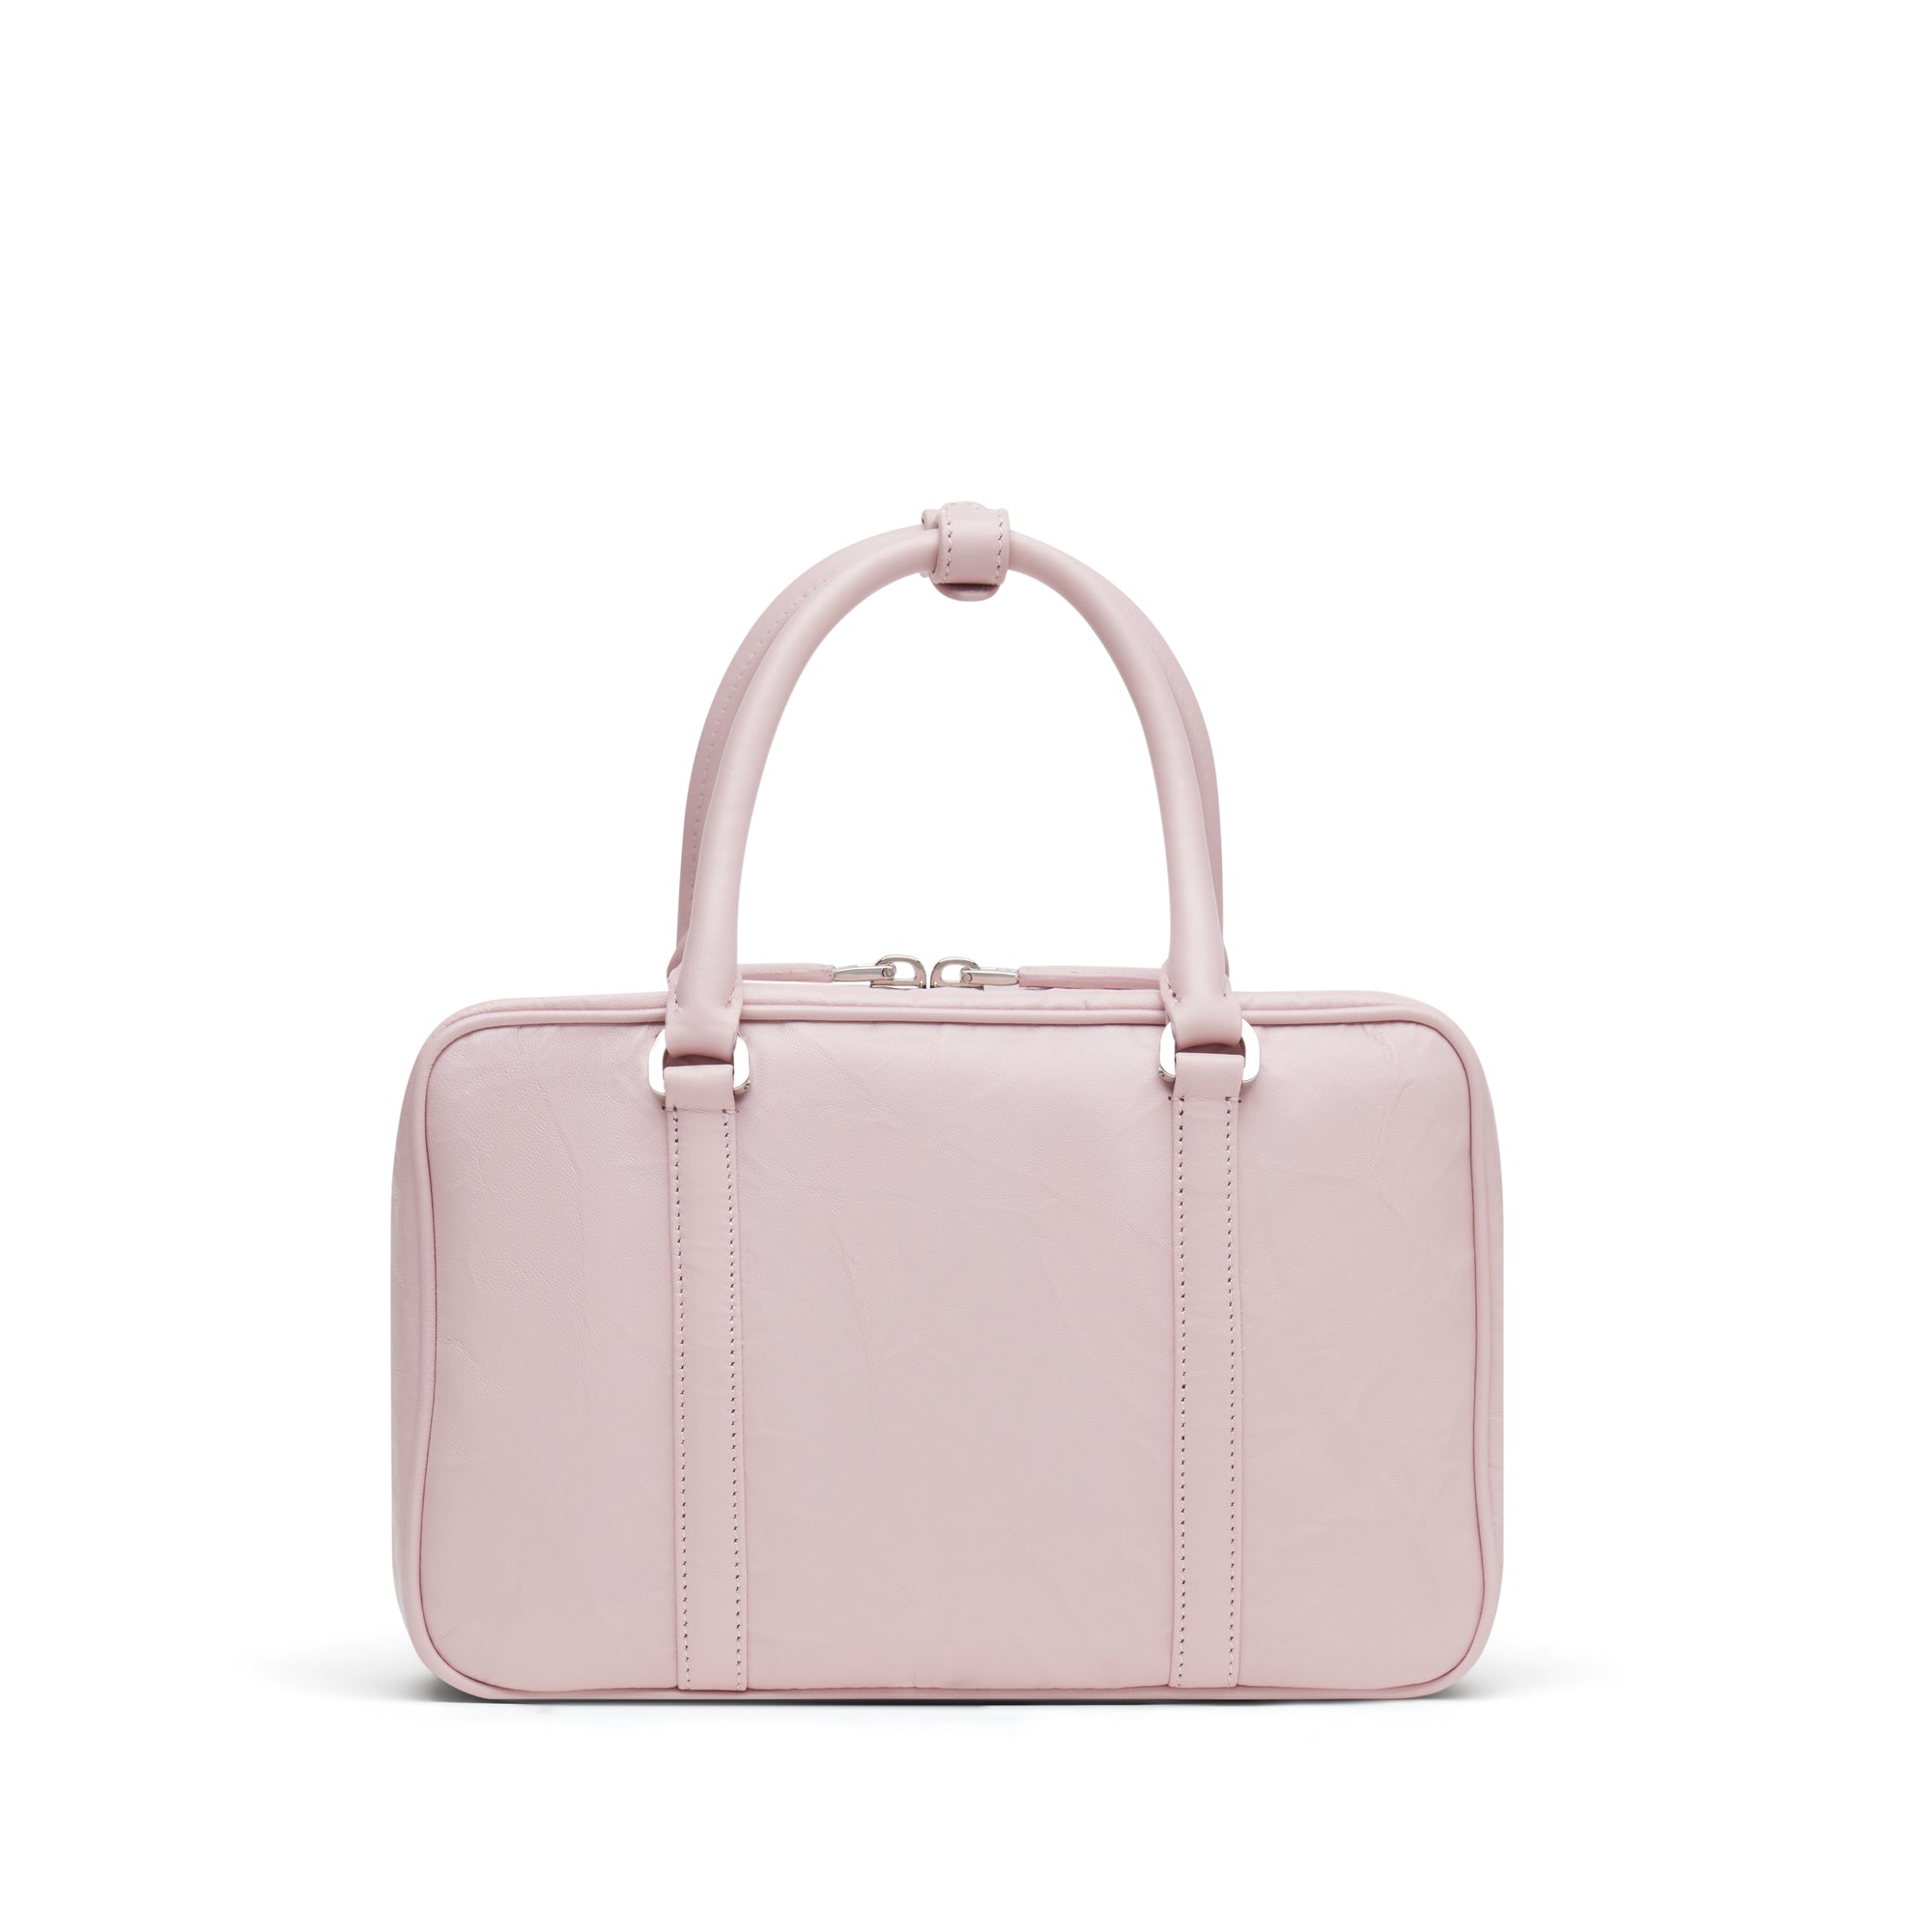 Prada - Women’s Medium Top Handle Handbag - (Alabaster Pink) view 3